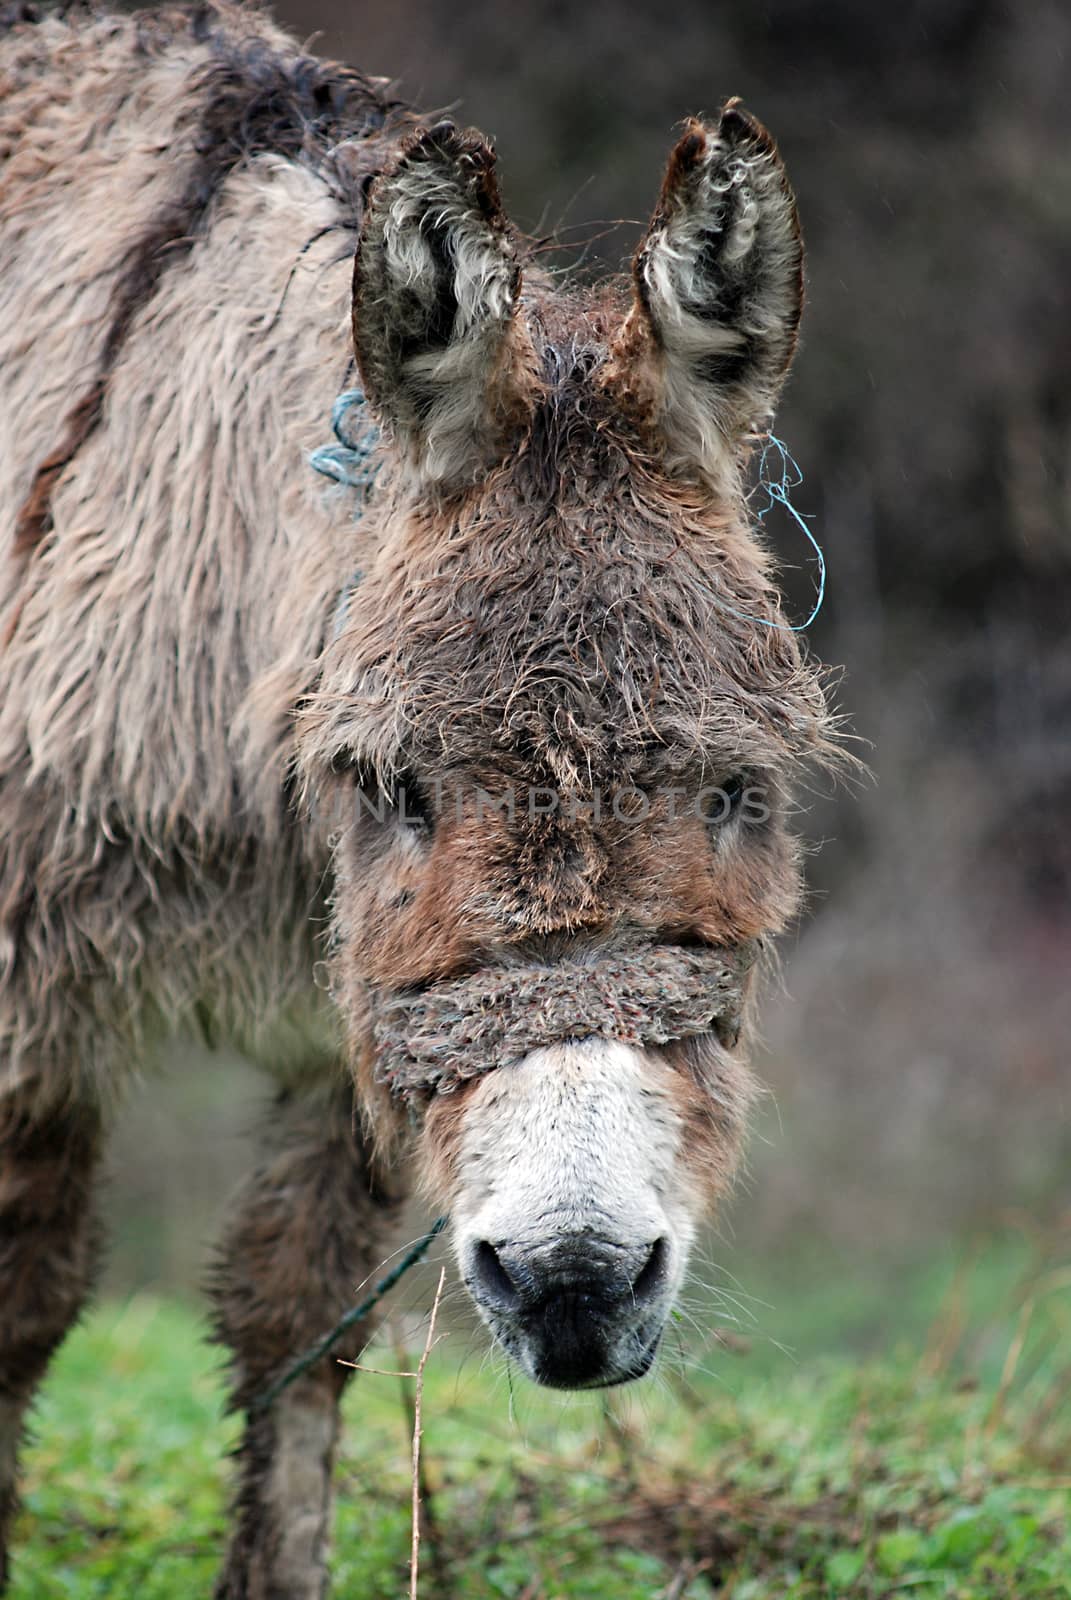 Poor wet donkey on the rain